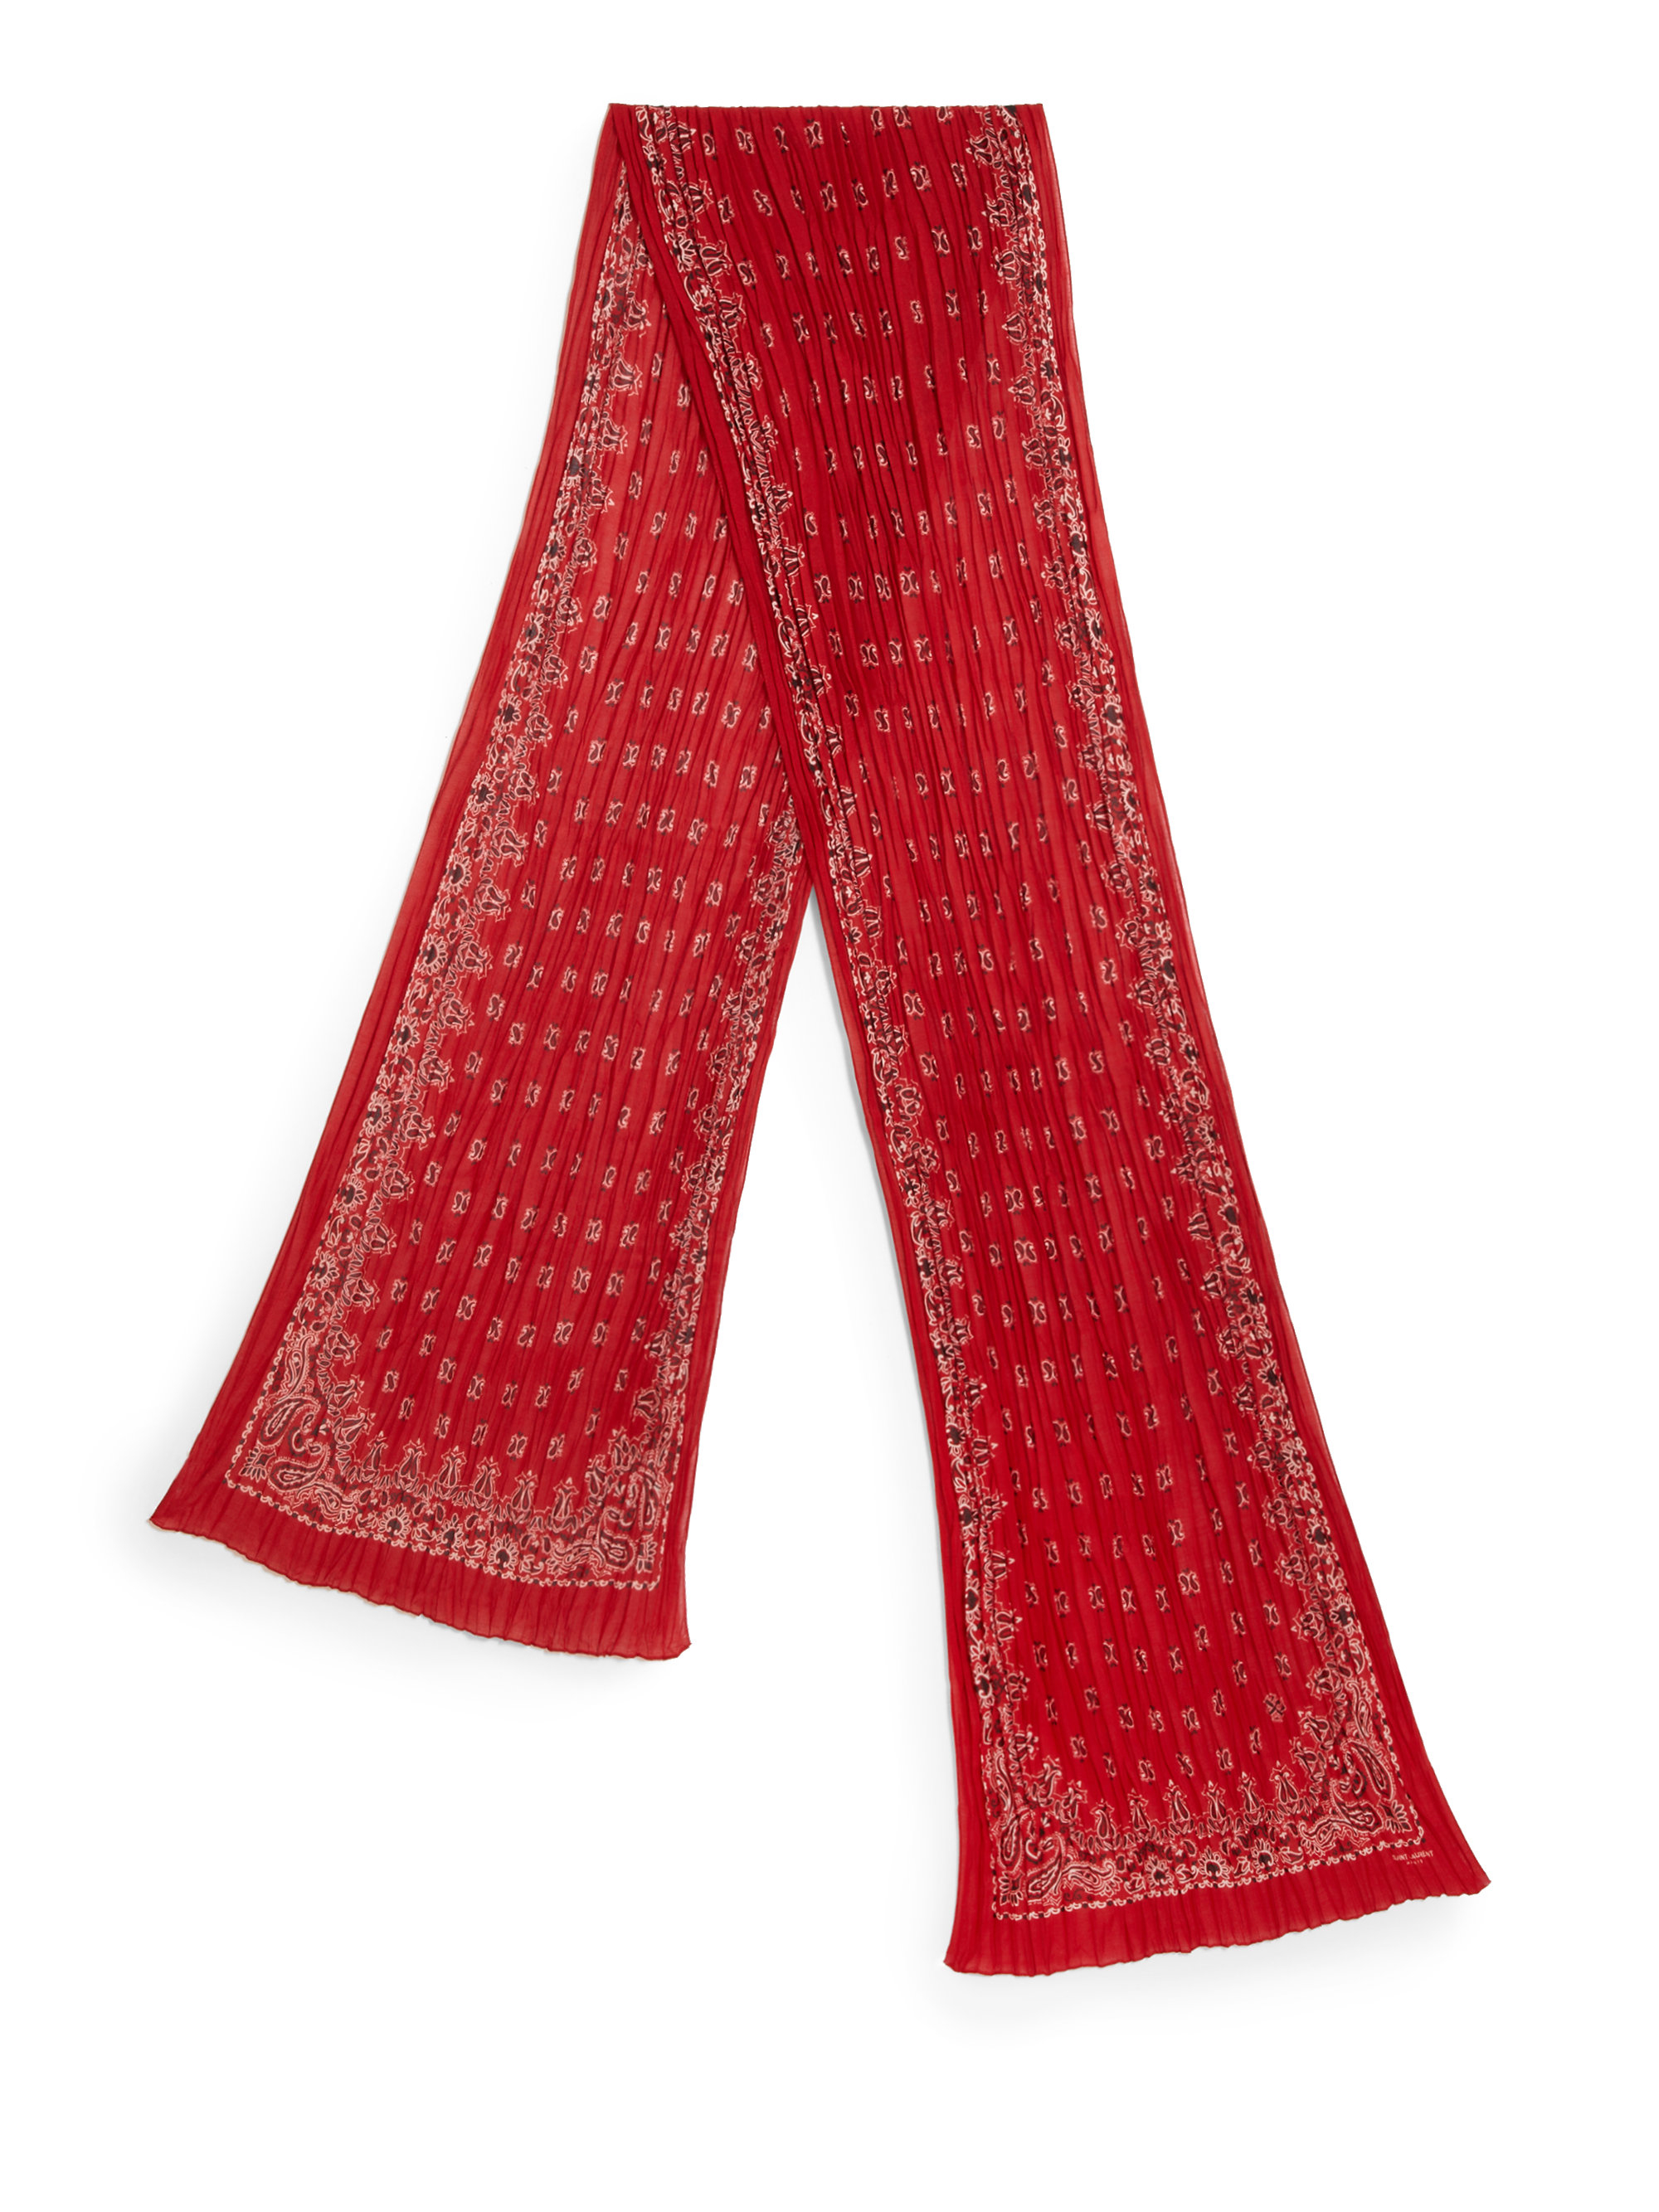 Saint Laurent Bandana Print Cashmere Silk Scarf in Red | Lyst